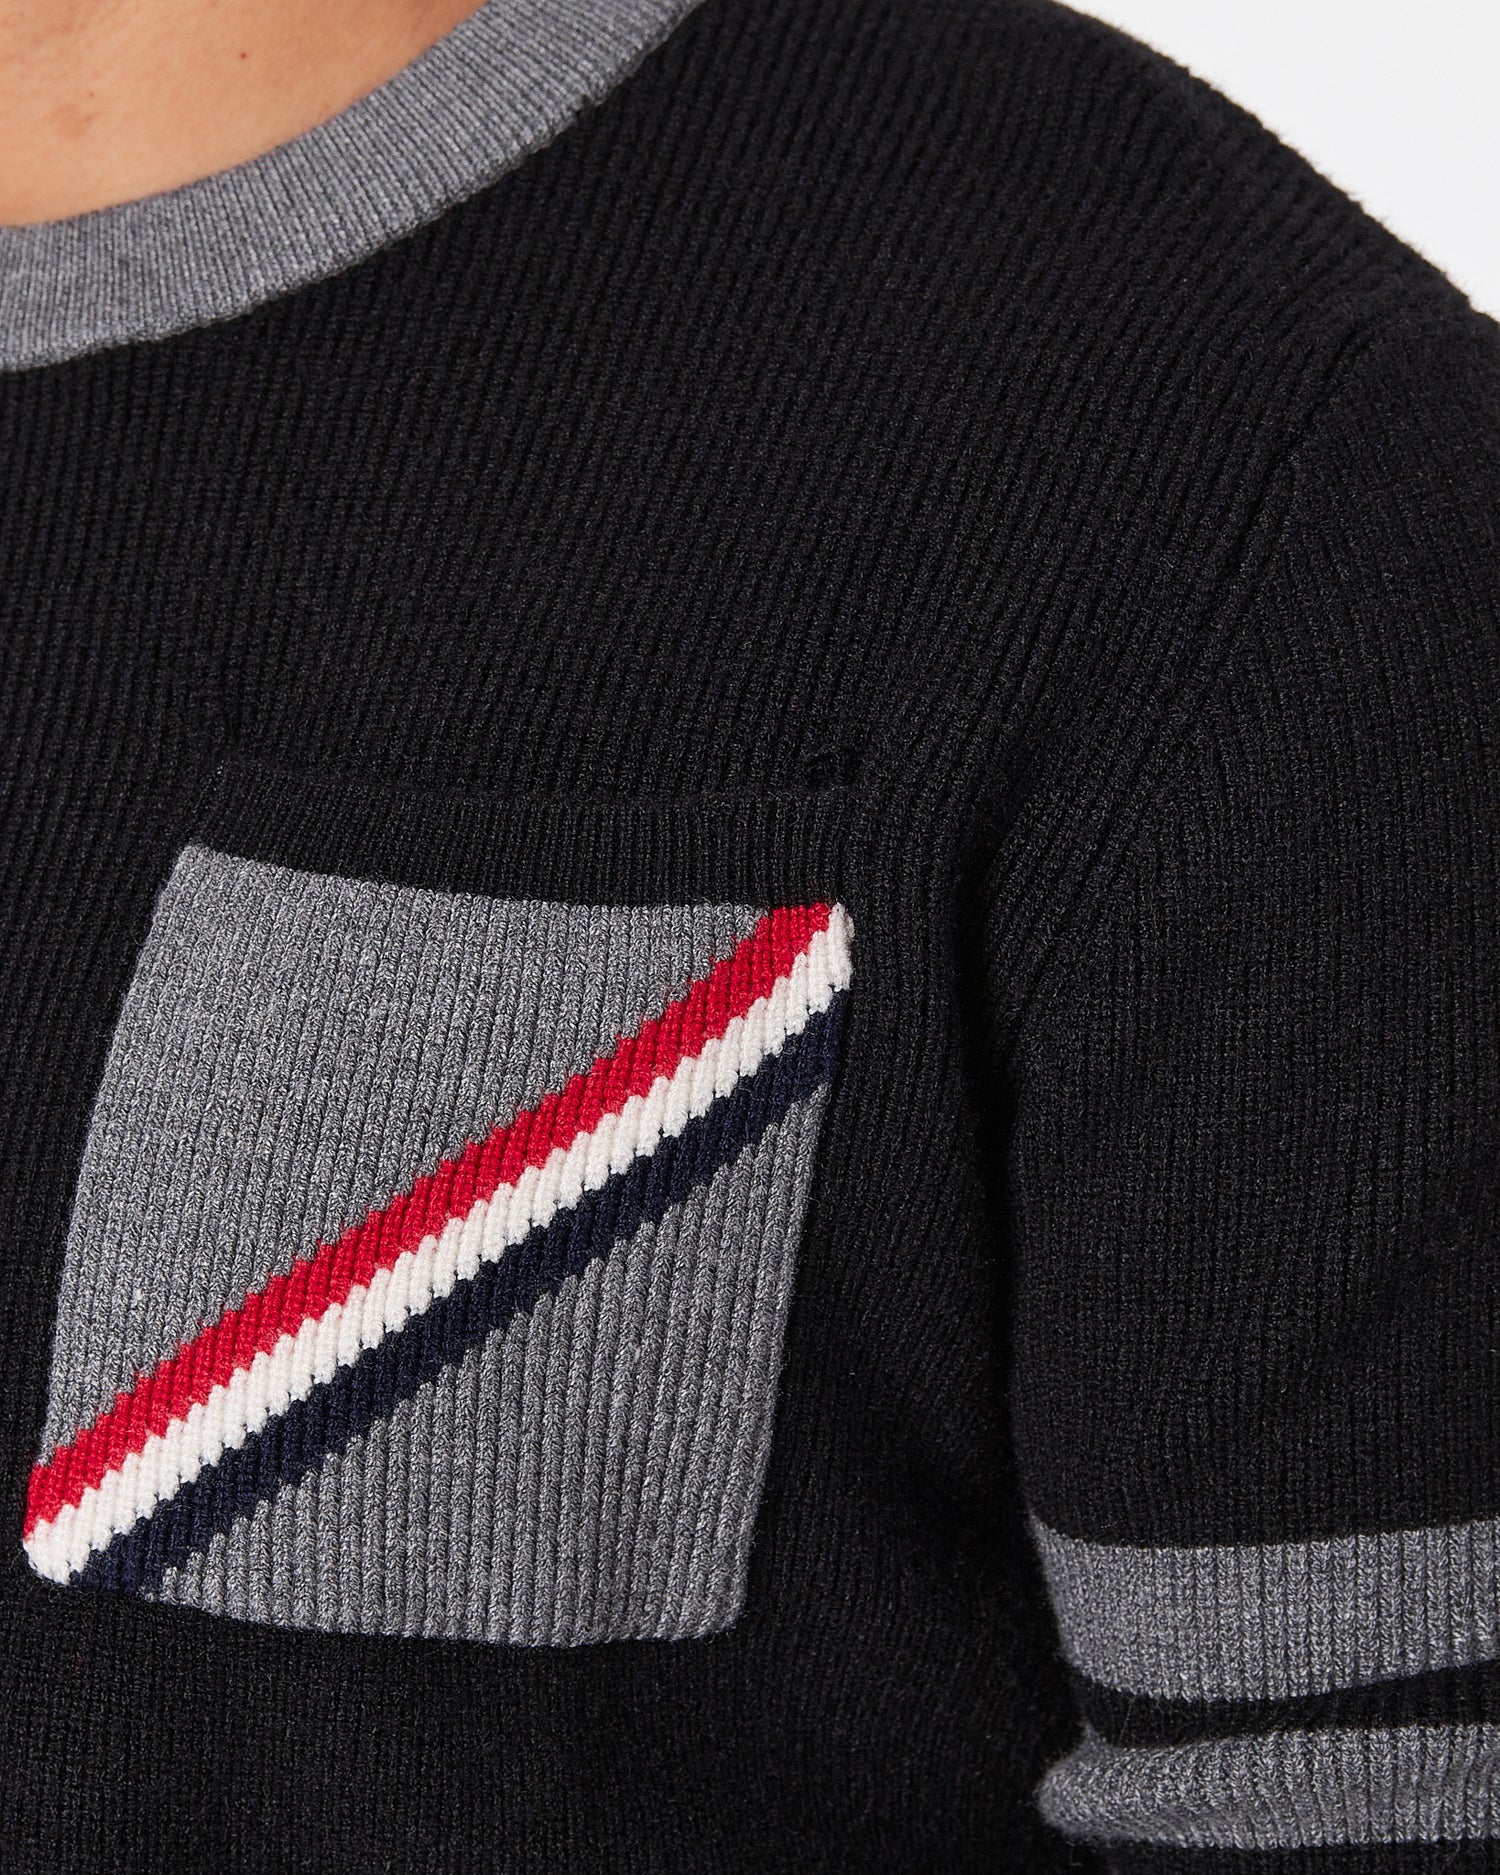 TB Crew Neck Pullover Men Grey Soft Knit Sweater 72.90